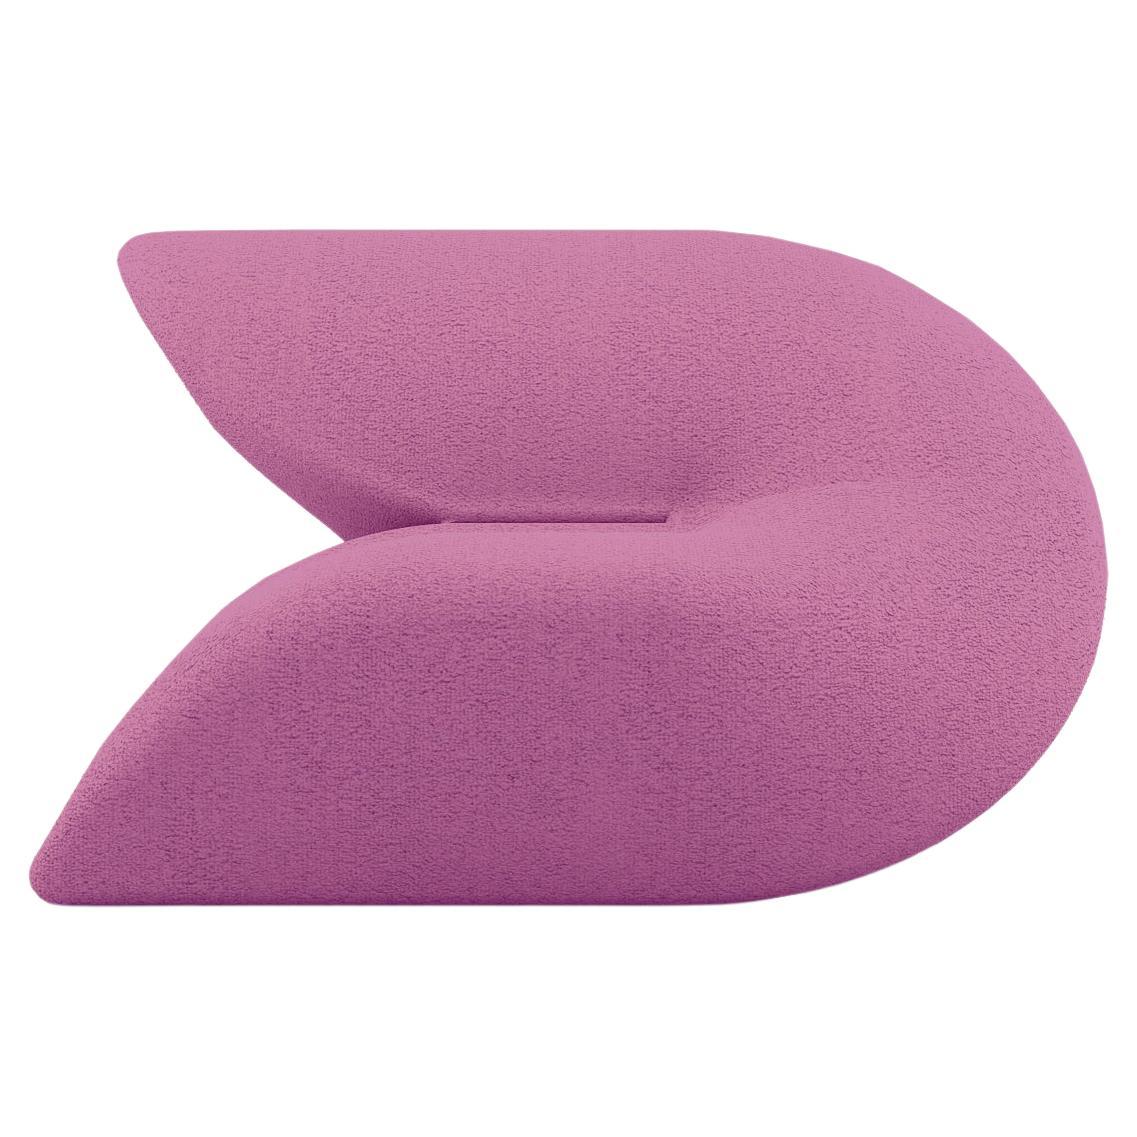 Delta Armchair - Modern Violet Upholstered Armchair